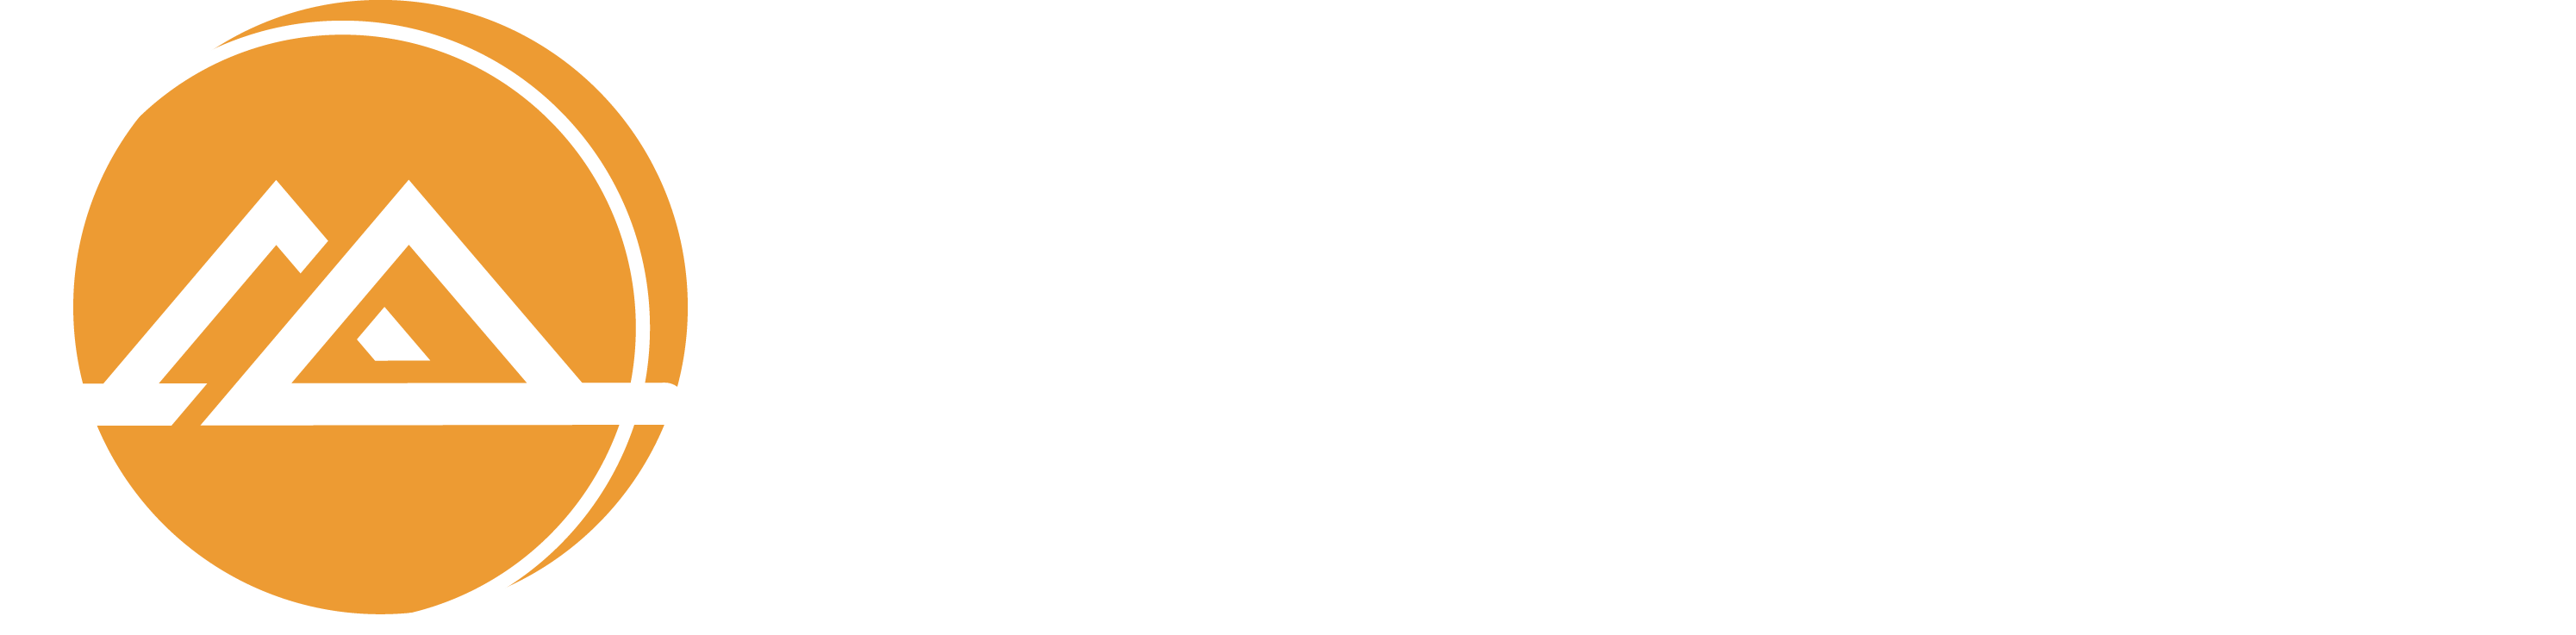 Peaceful Profits